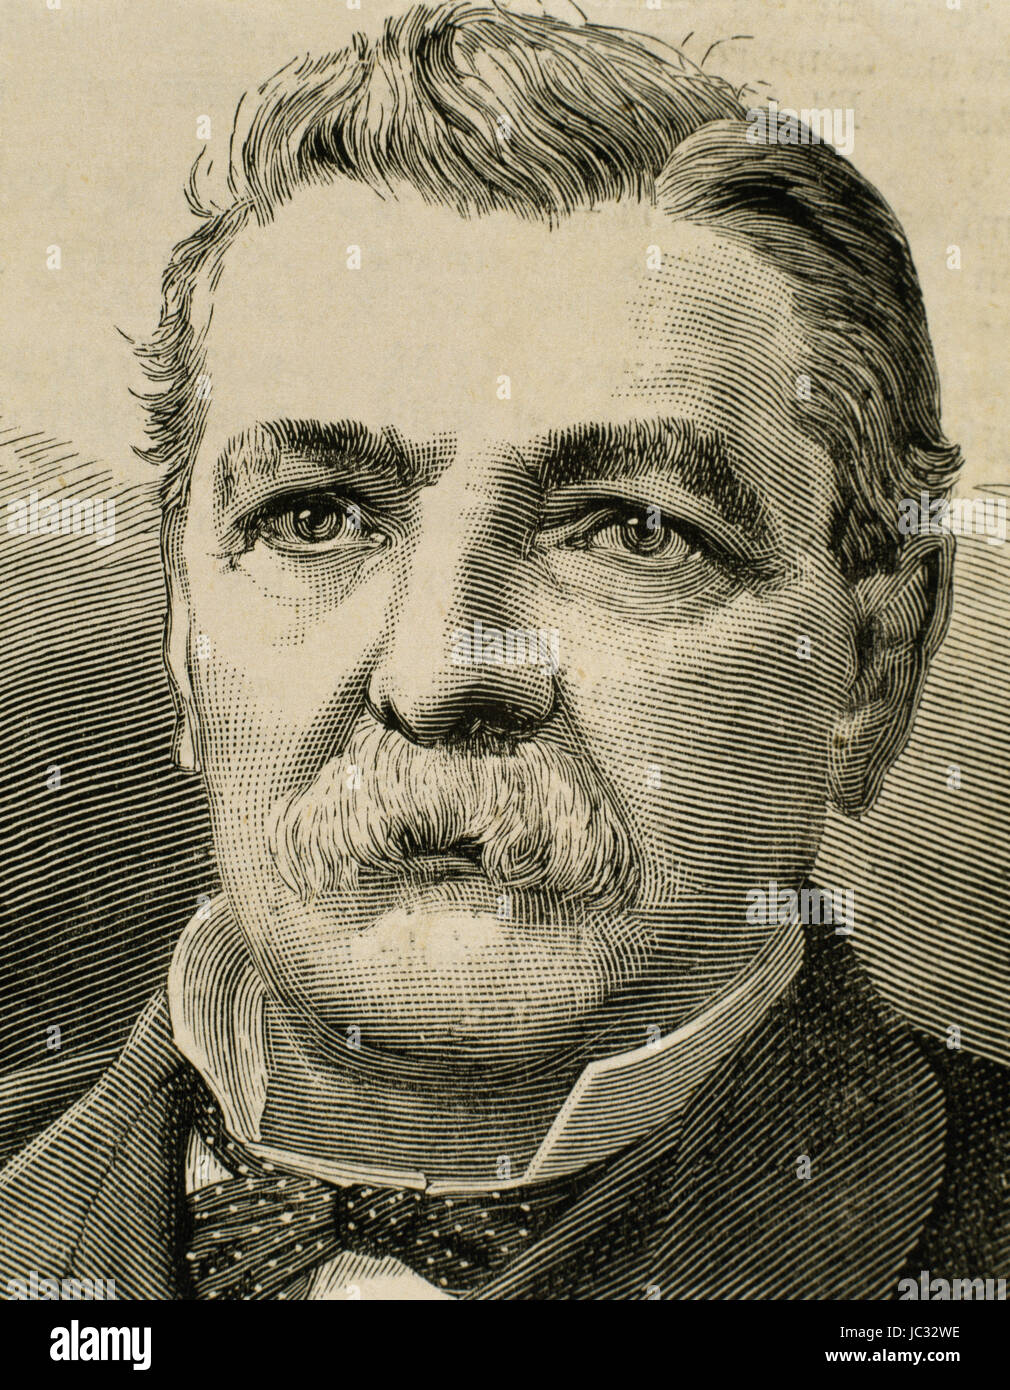 Domingo Santa María Gonzalez (1825-1889). Chilean politician. President of Chile between 1881 and 1886. Portrait. Engraving. Stock Photo